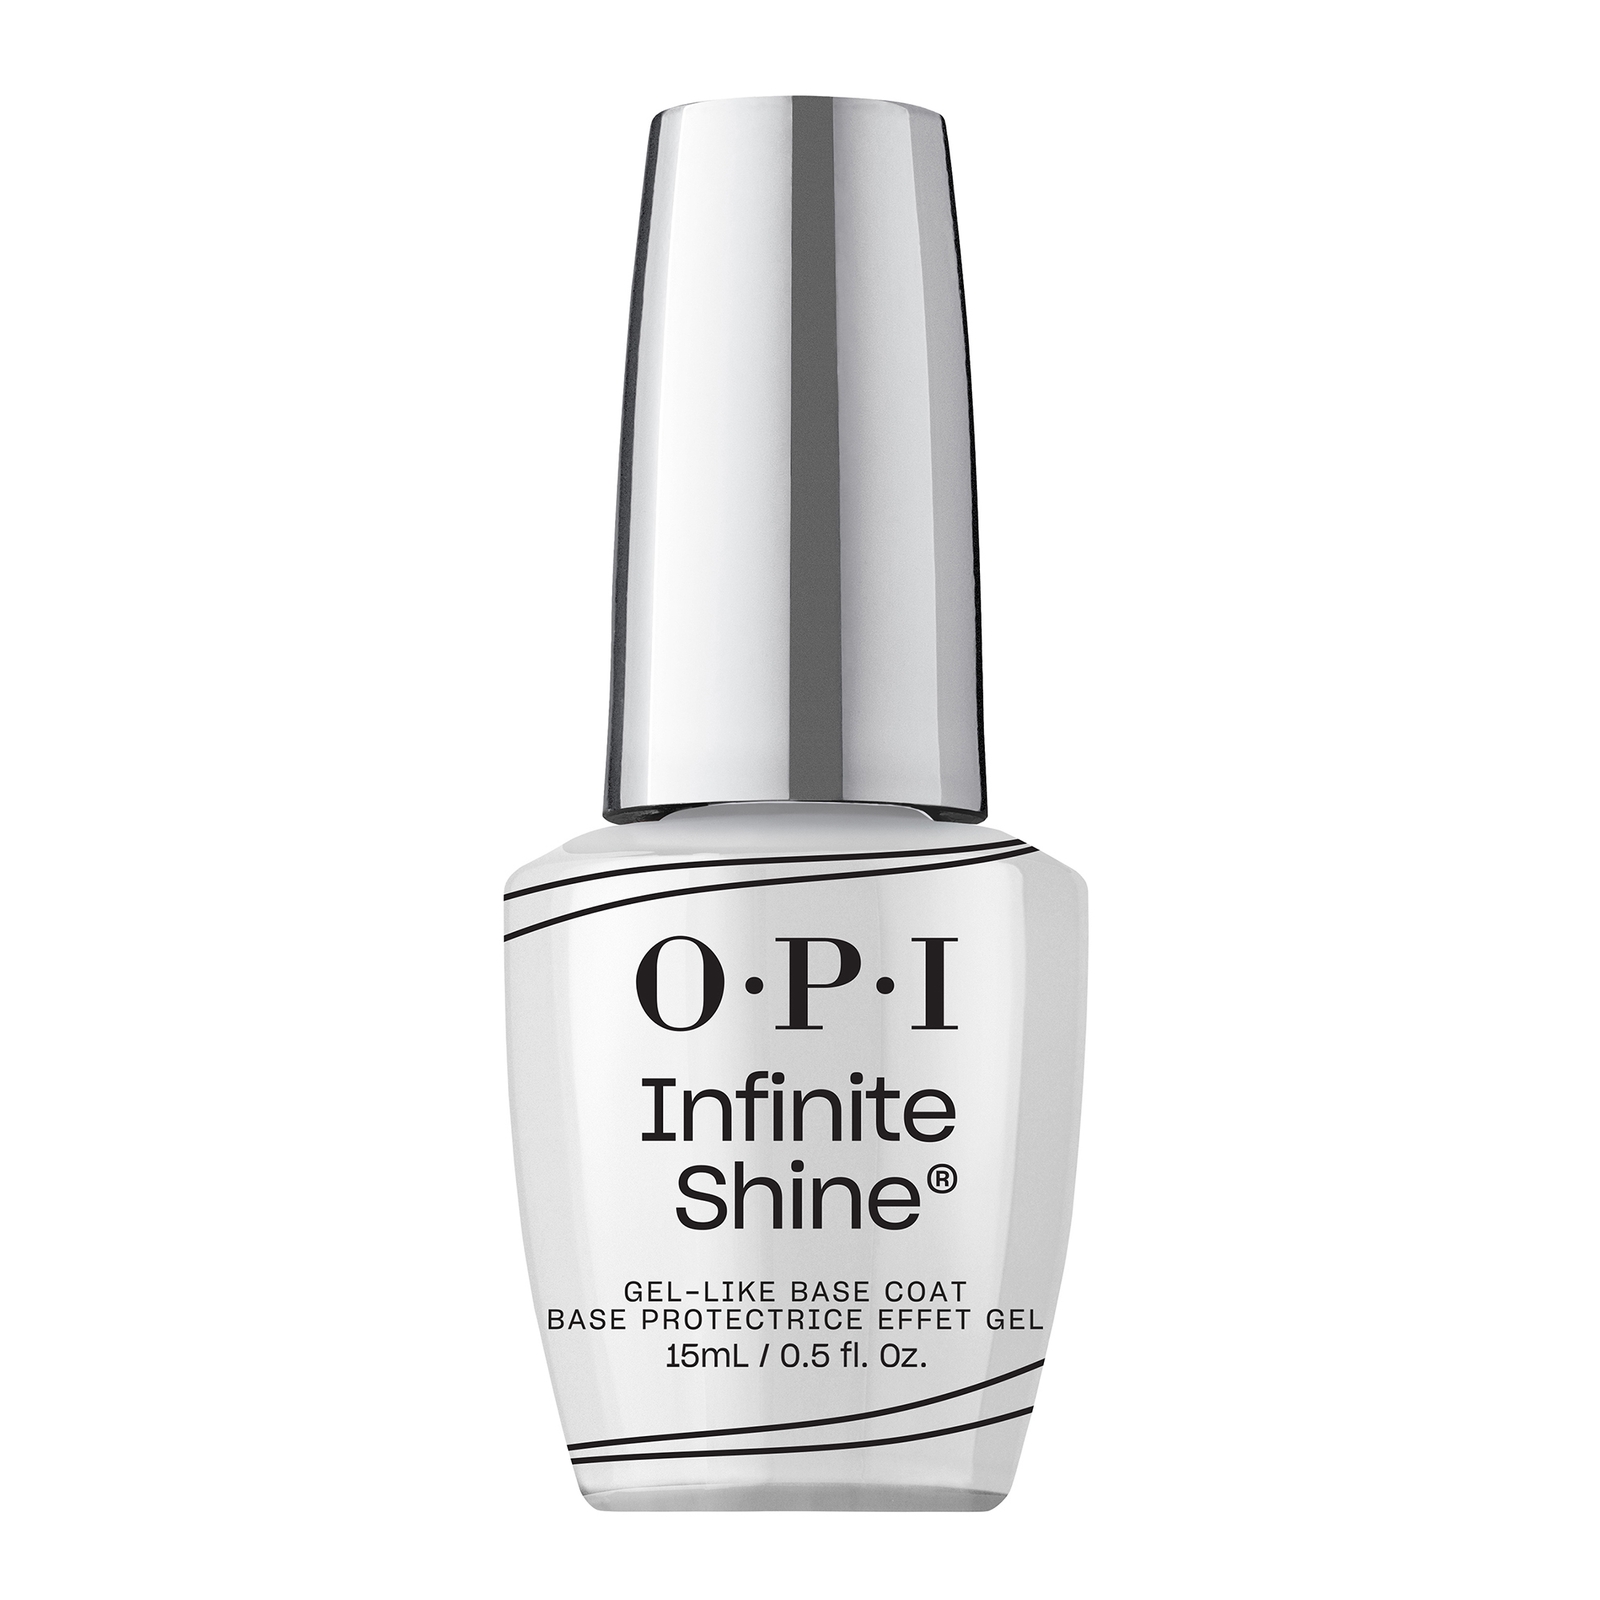 Opi Infinite Shine Long-wear Nail Polish - Base Coat 15ml In White